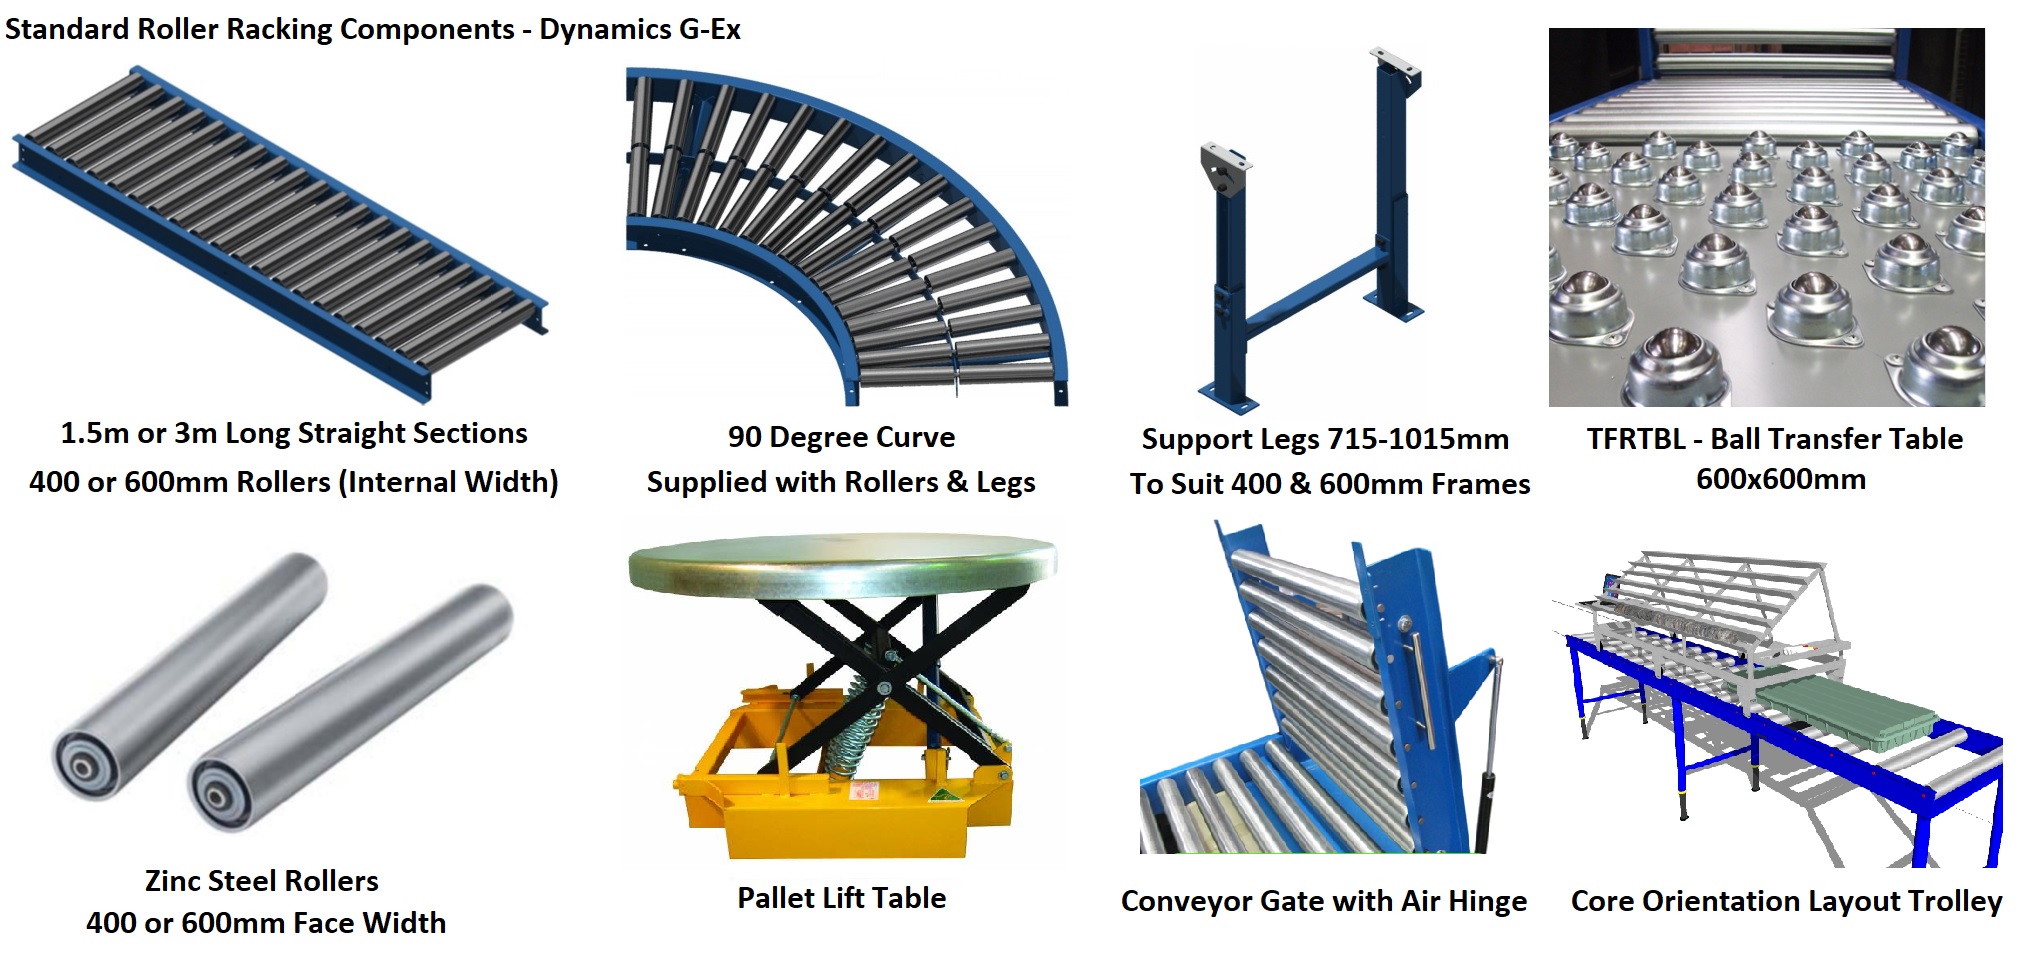 Standard Roller Racking Components